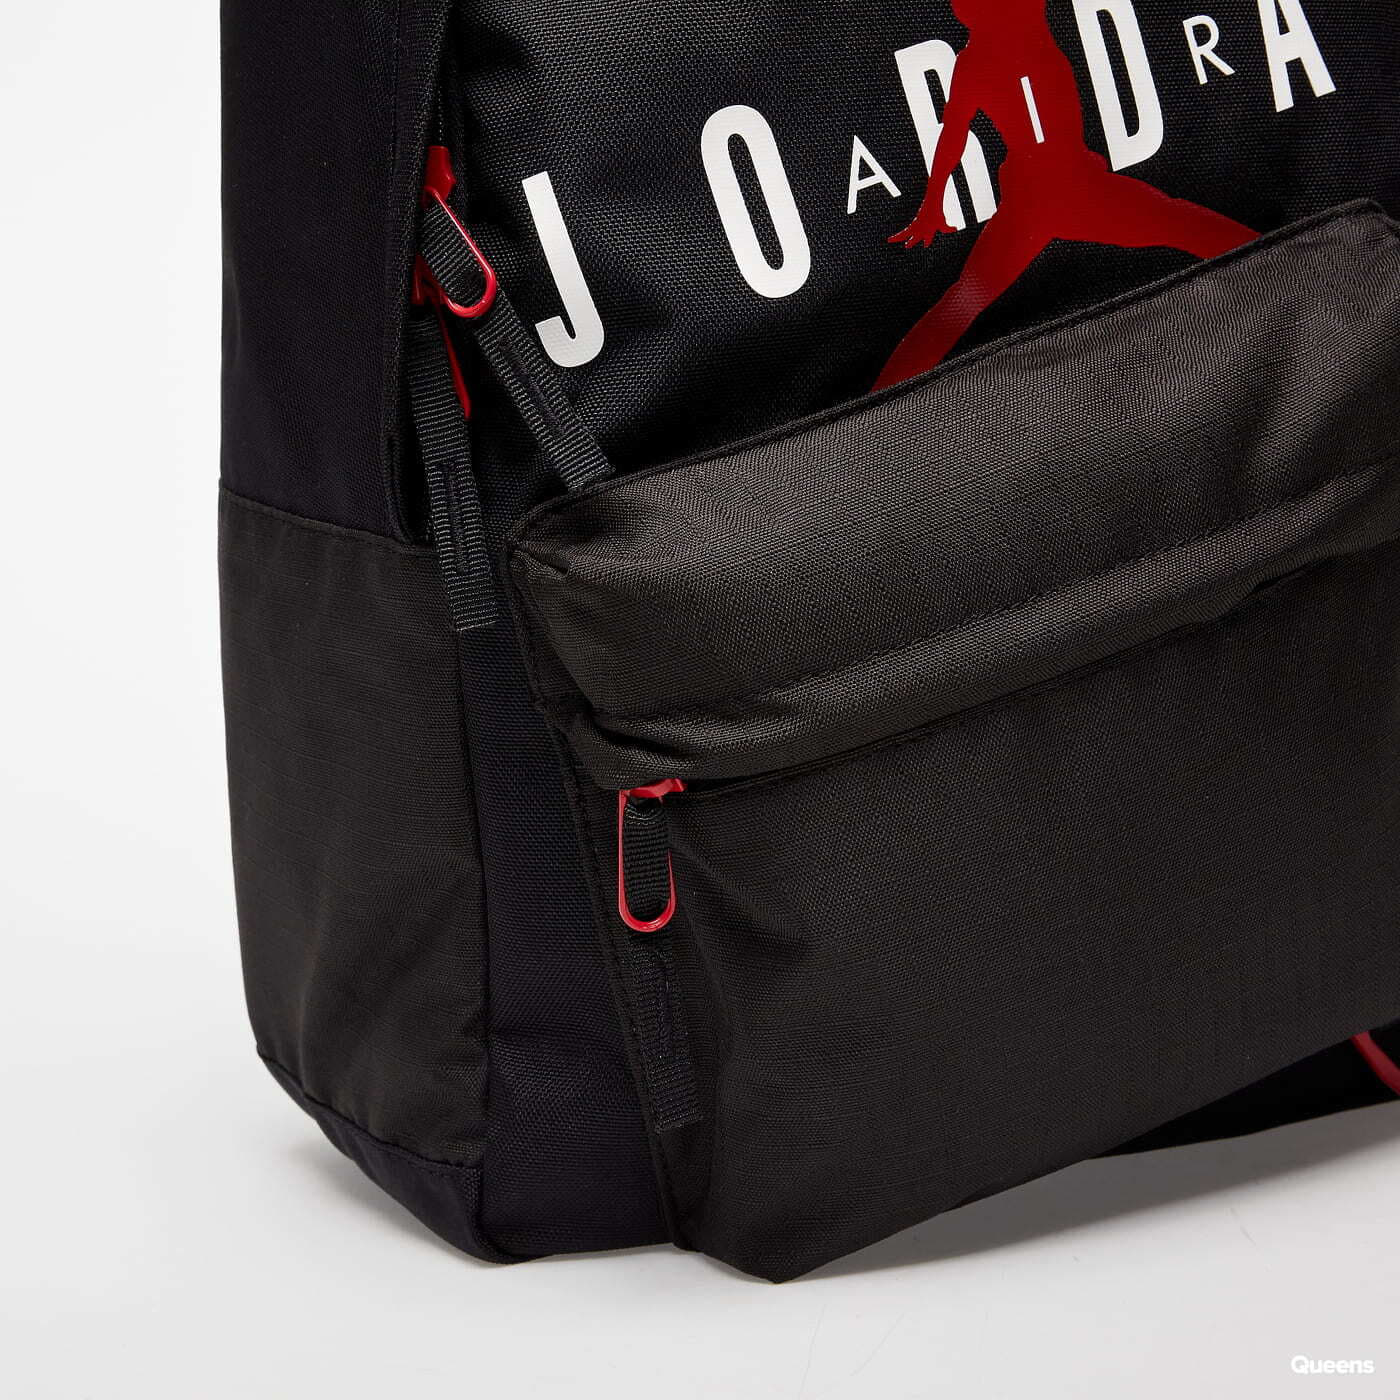 Nike Air Jordan HBR Air Backpack (One Size, Black) 